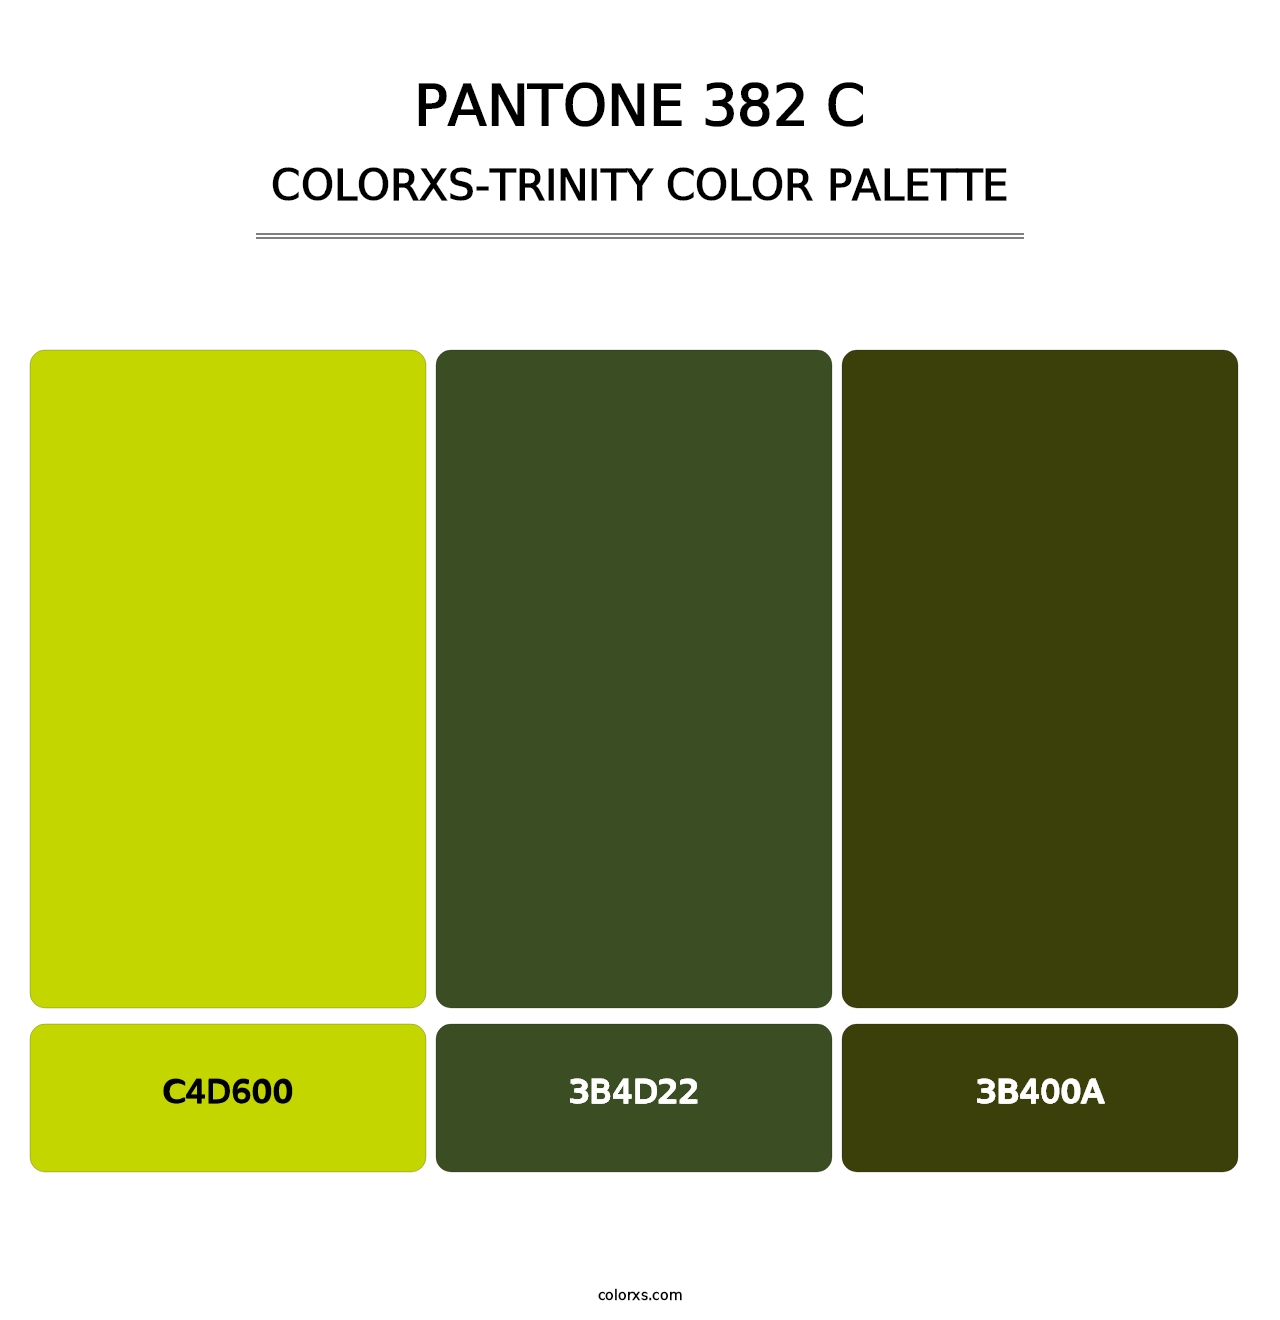 PANTONE 382 C - Colorxs Trinity Palette